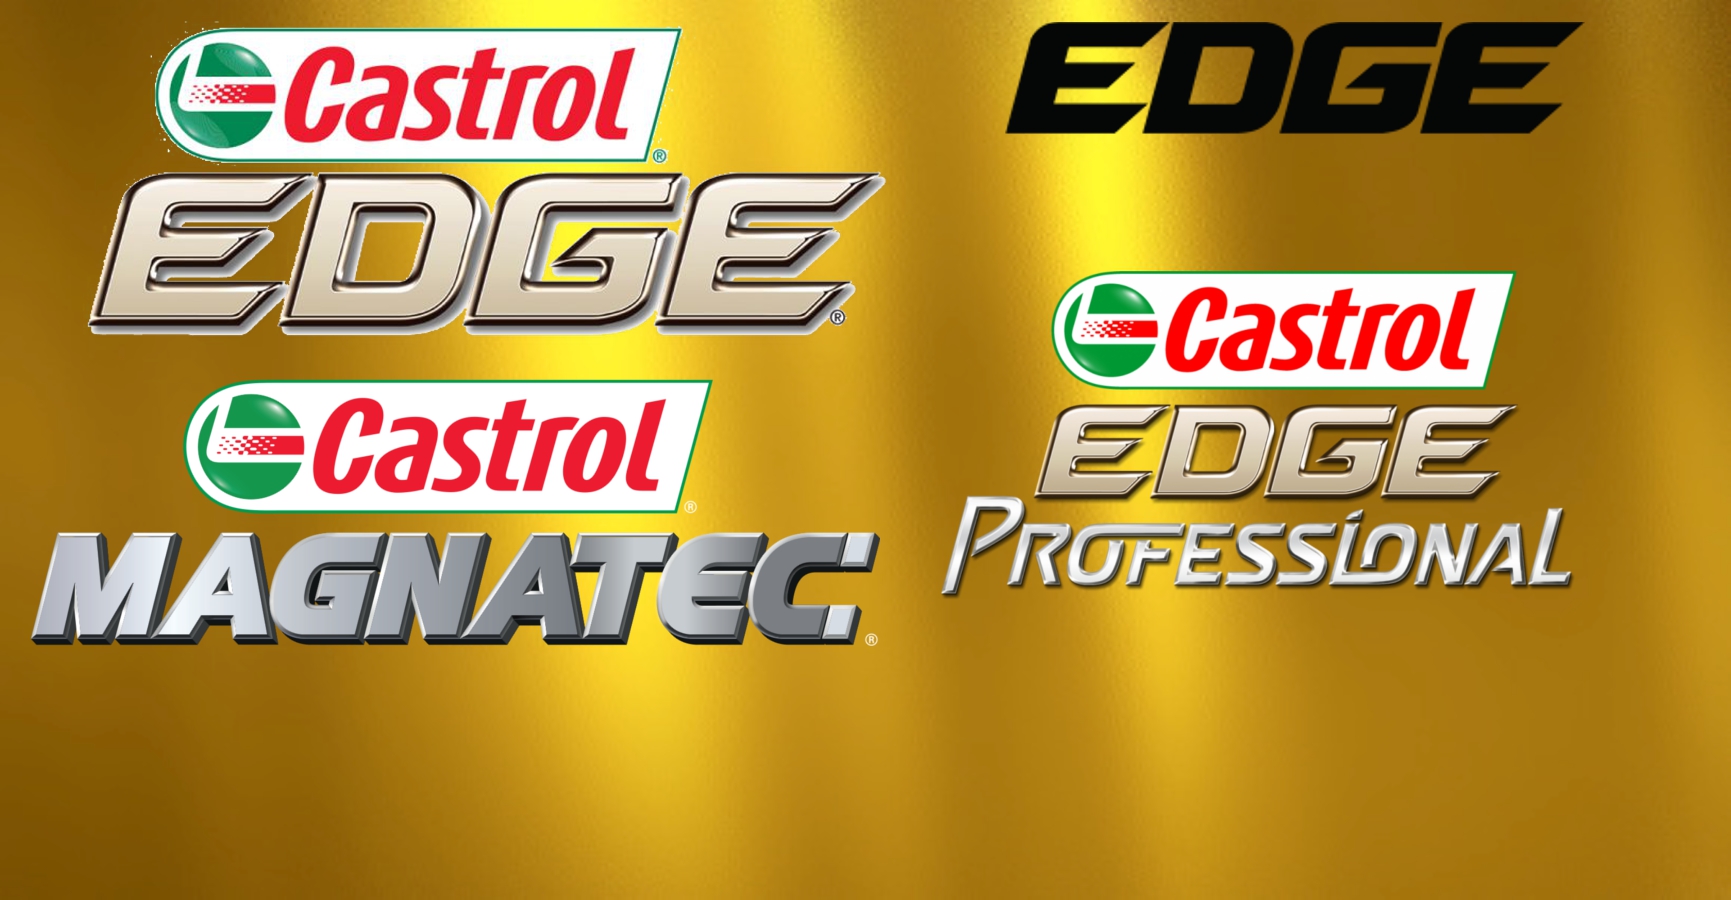 castrol edge logos.jpg